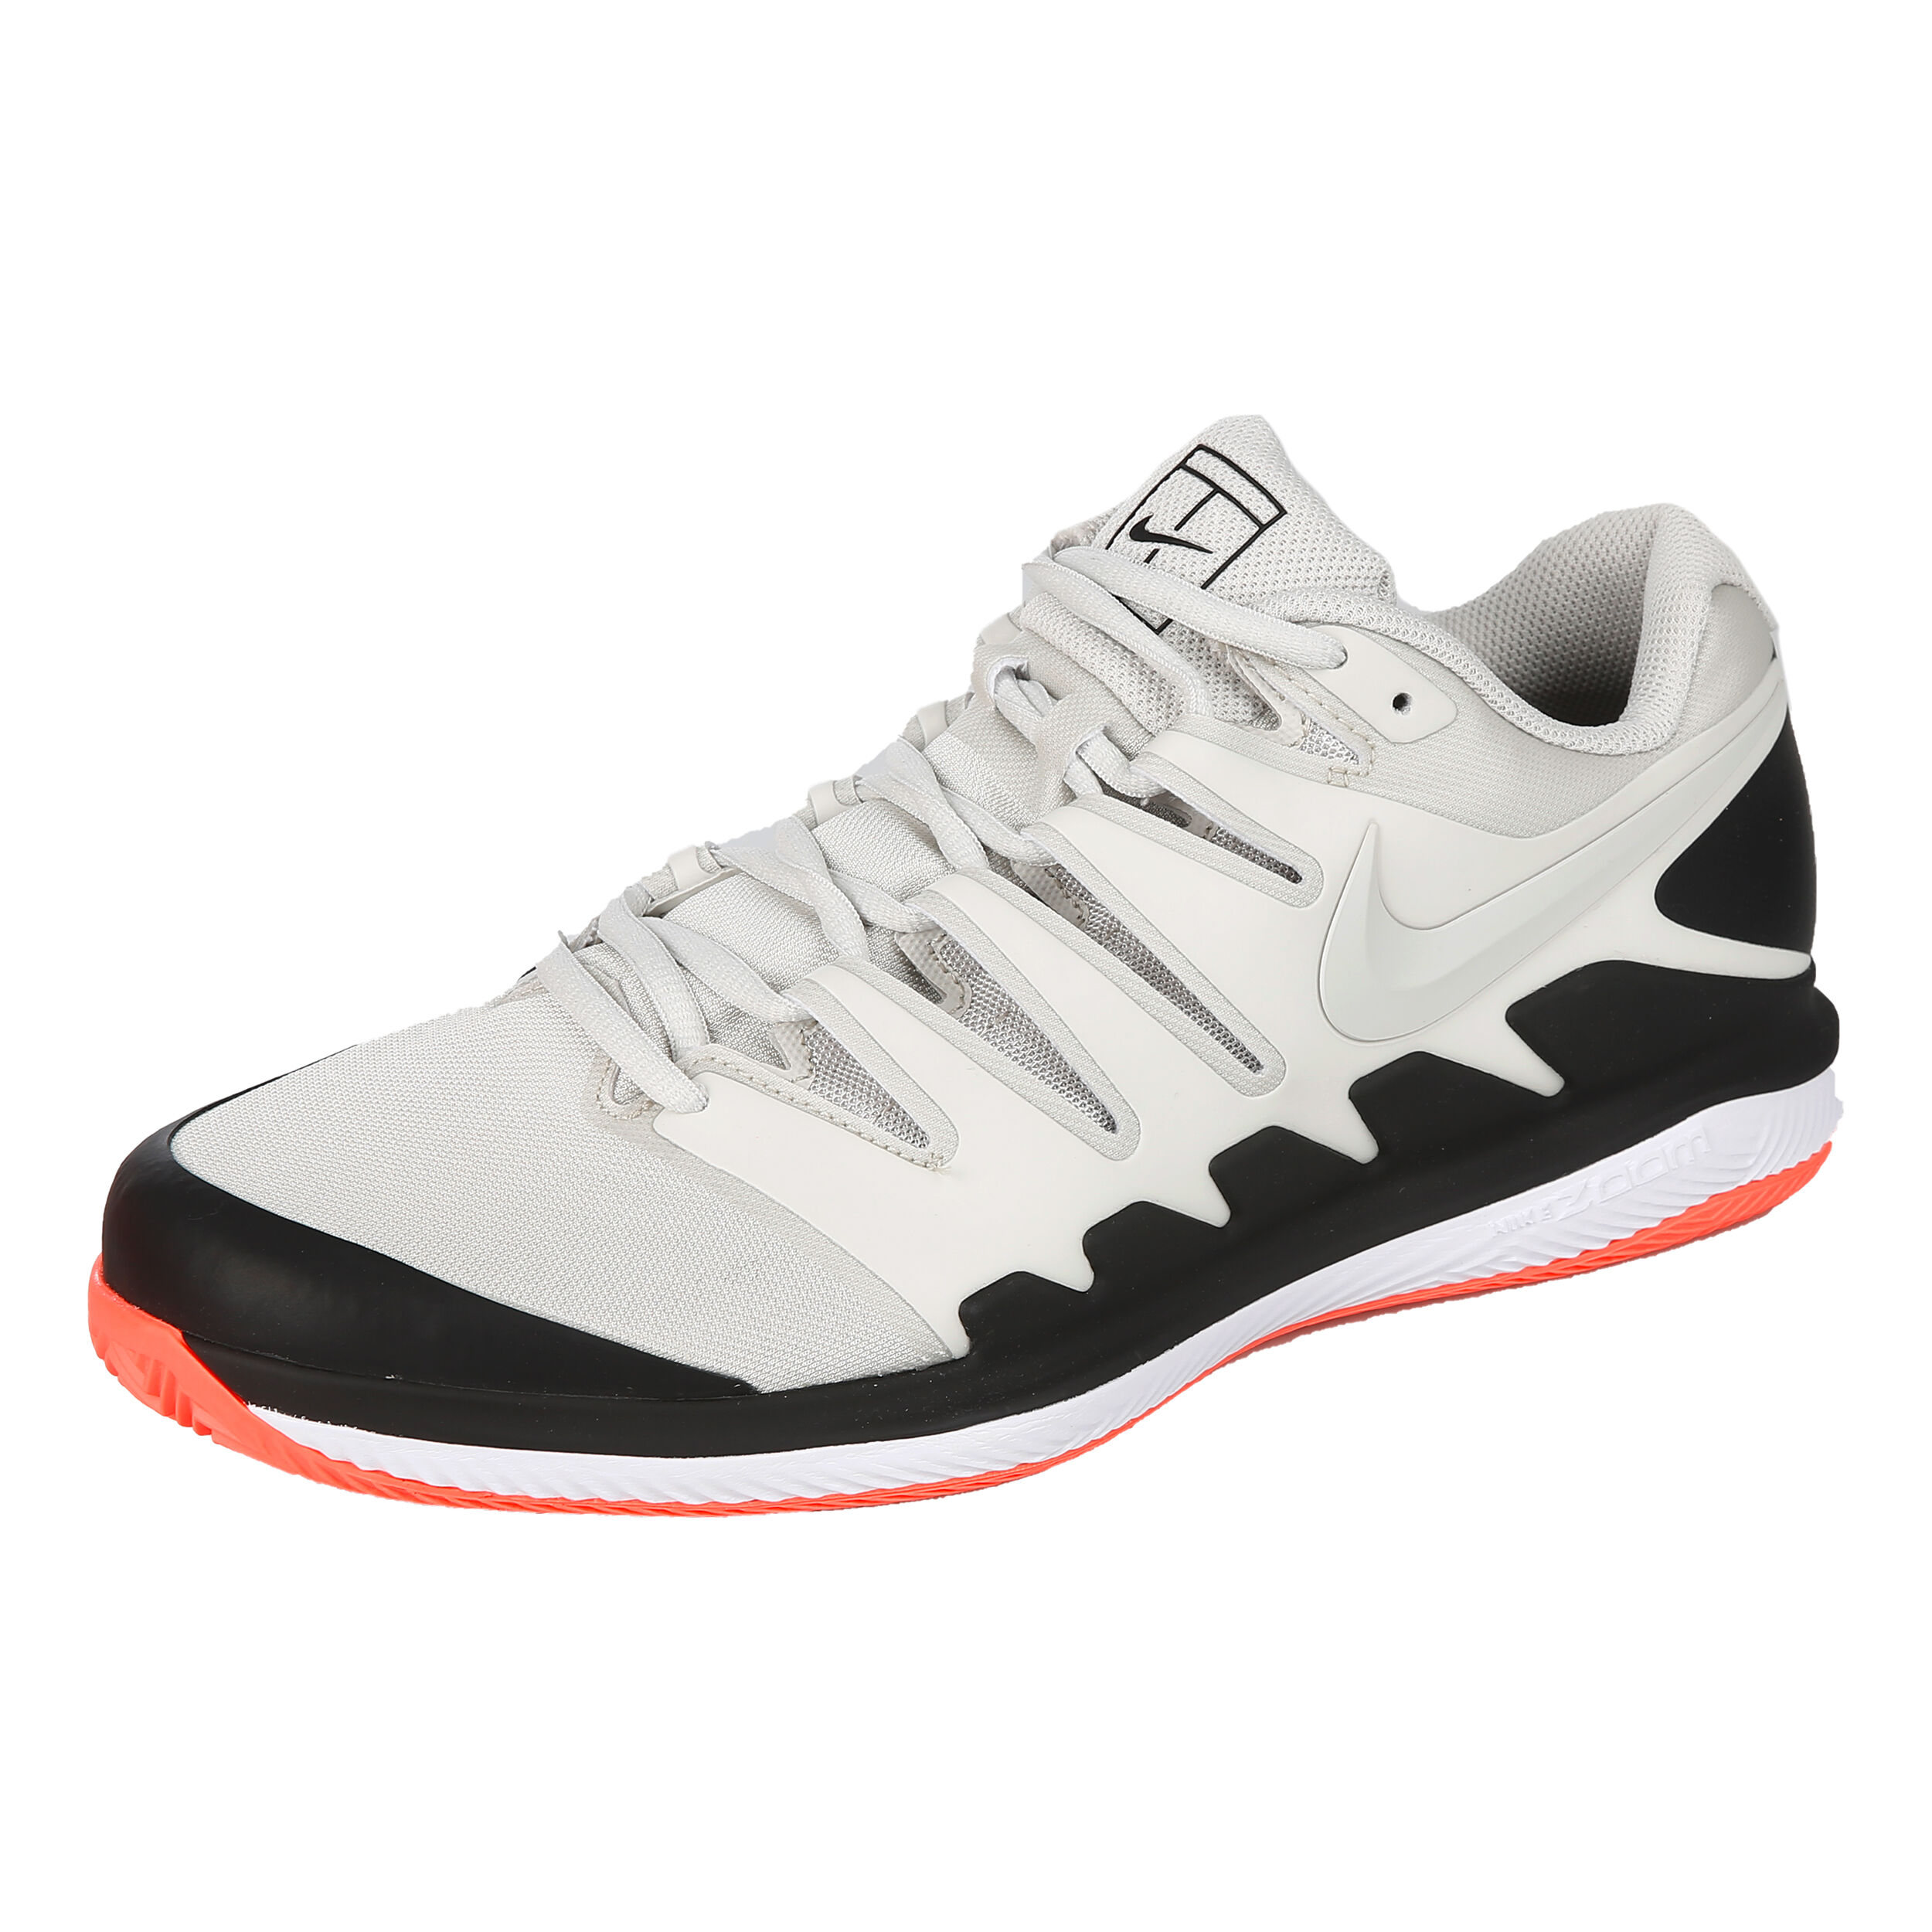 Nike Air Zoom Vapor X Clay Court Shoe Men - Beige, Black